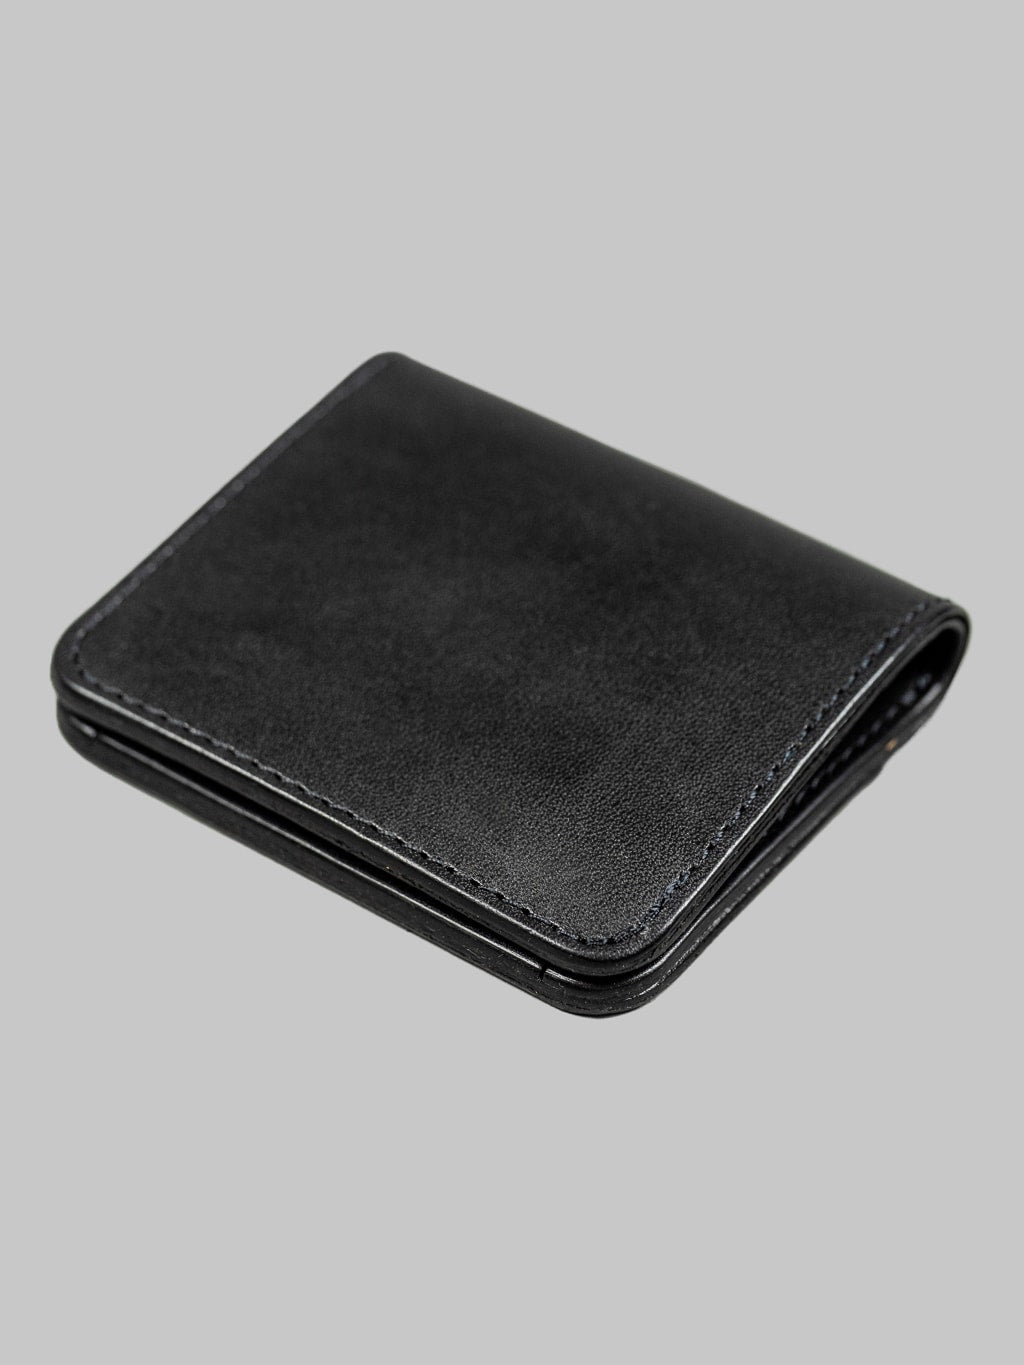 Studio D'Artisan Black Leather Mini Wallet